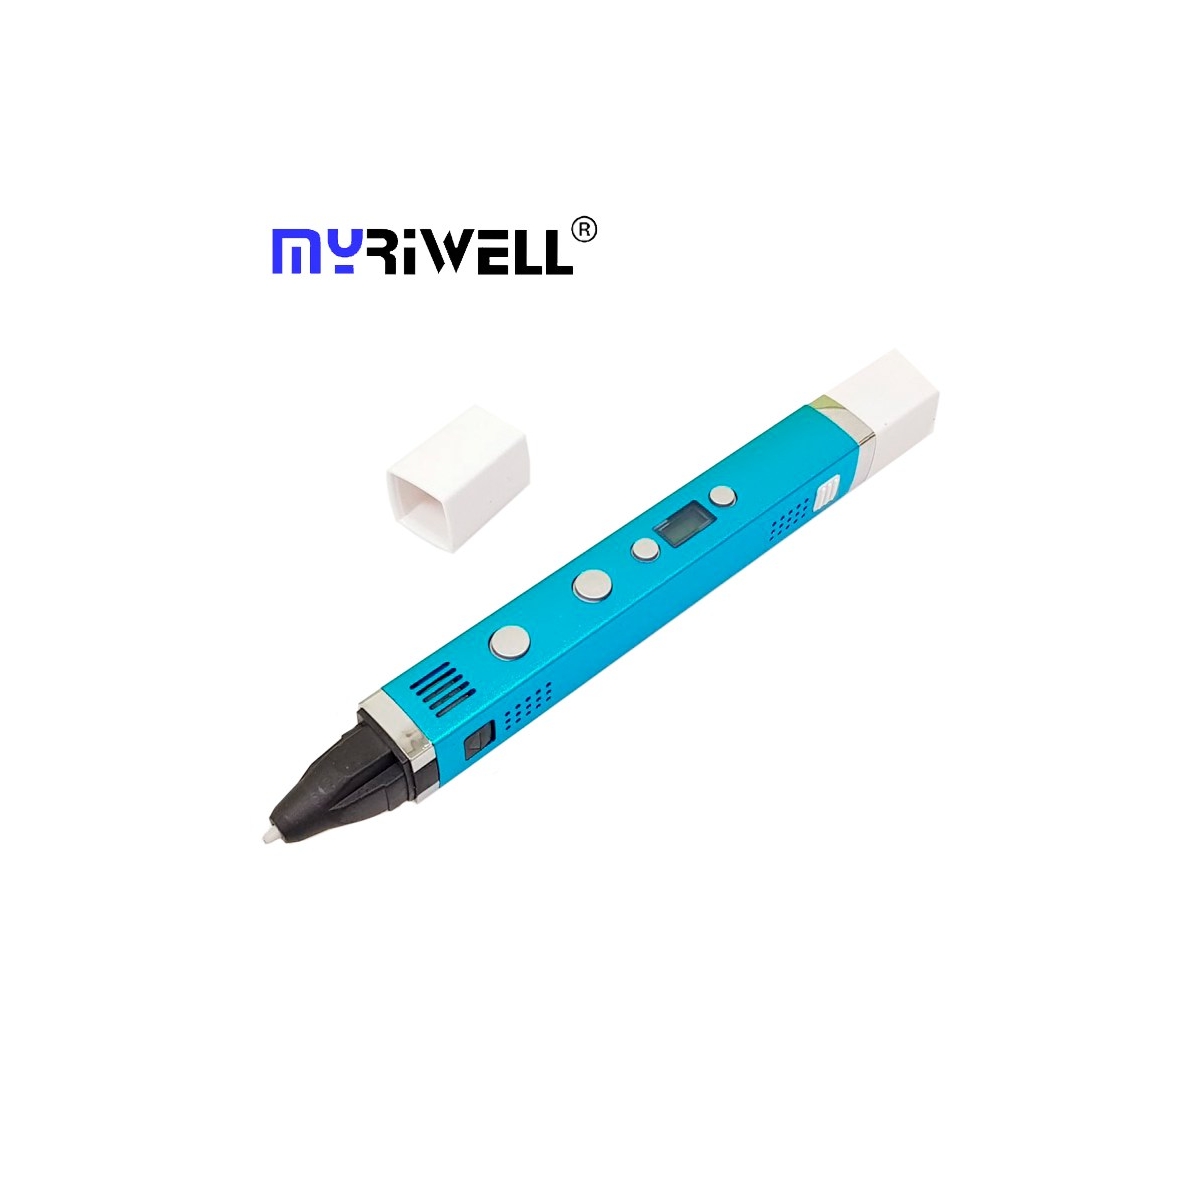 3D Ручка Myriwell RP-100C Голубая (LightBlue)